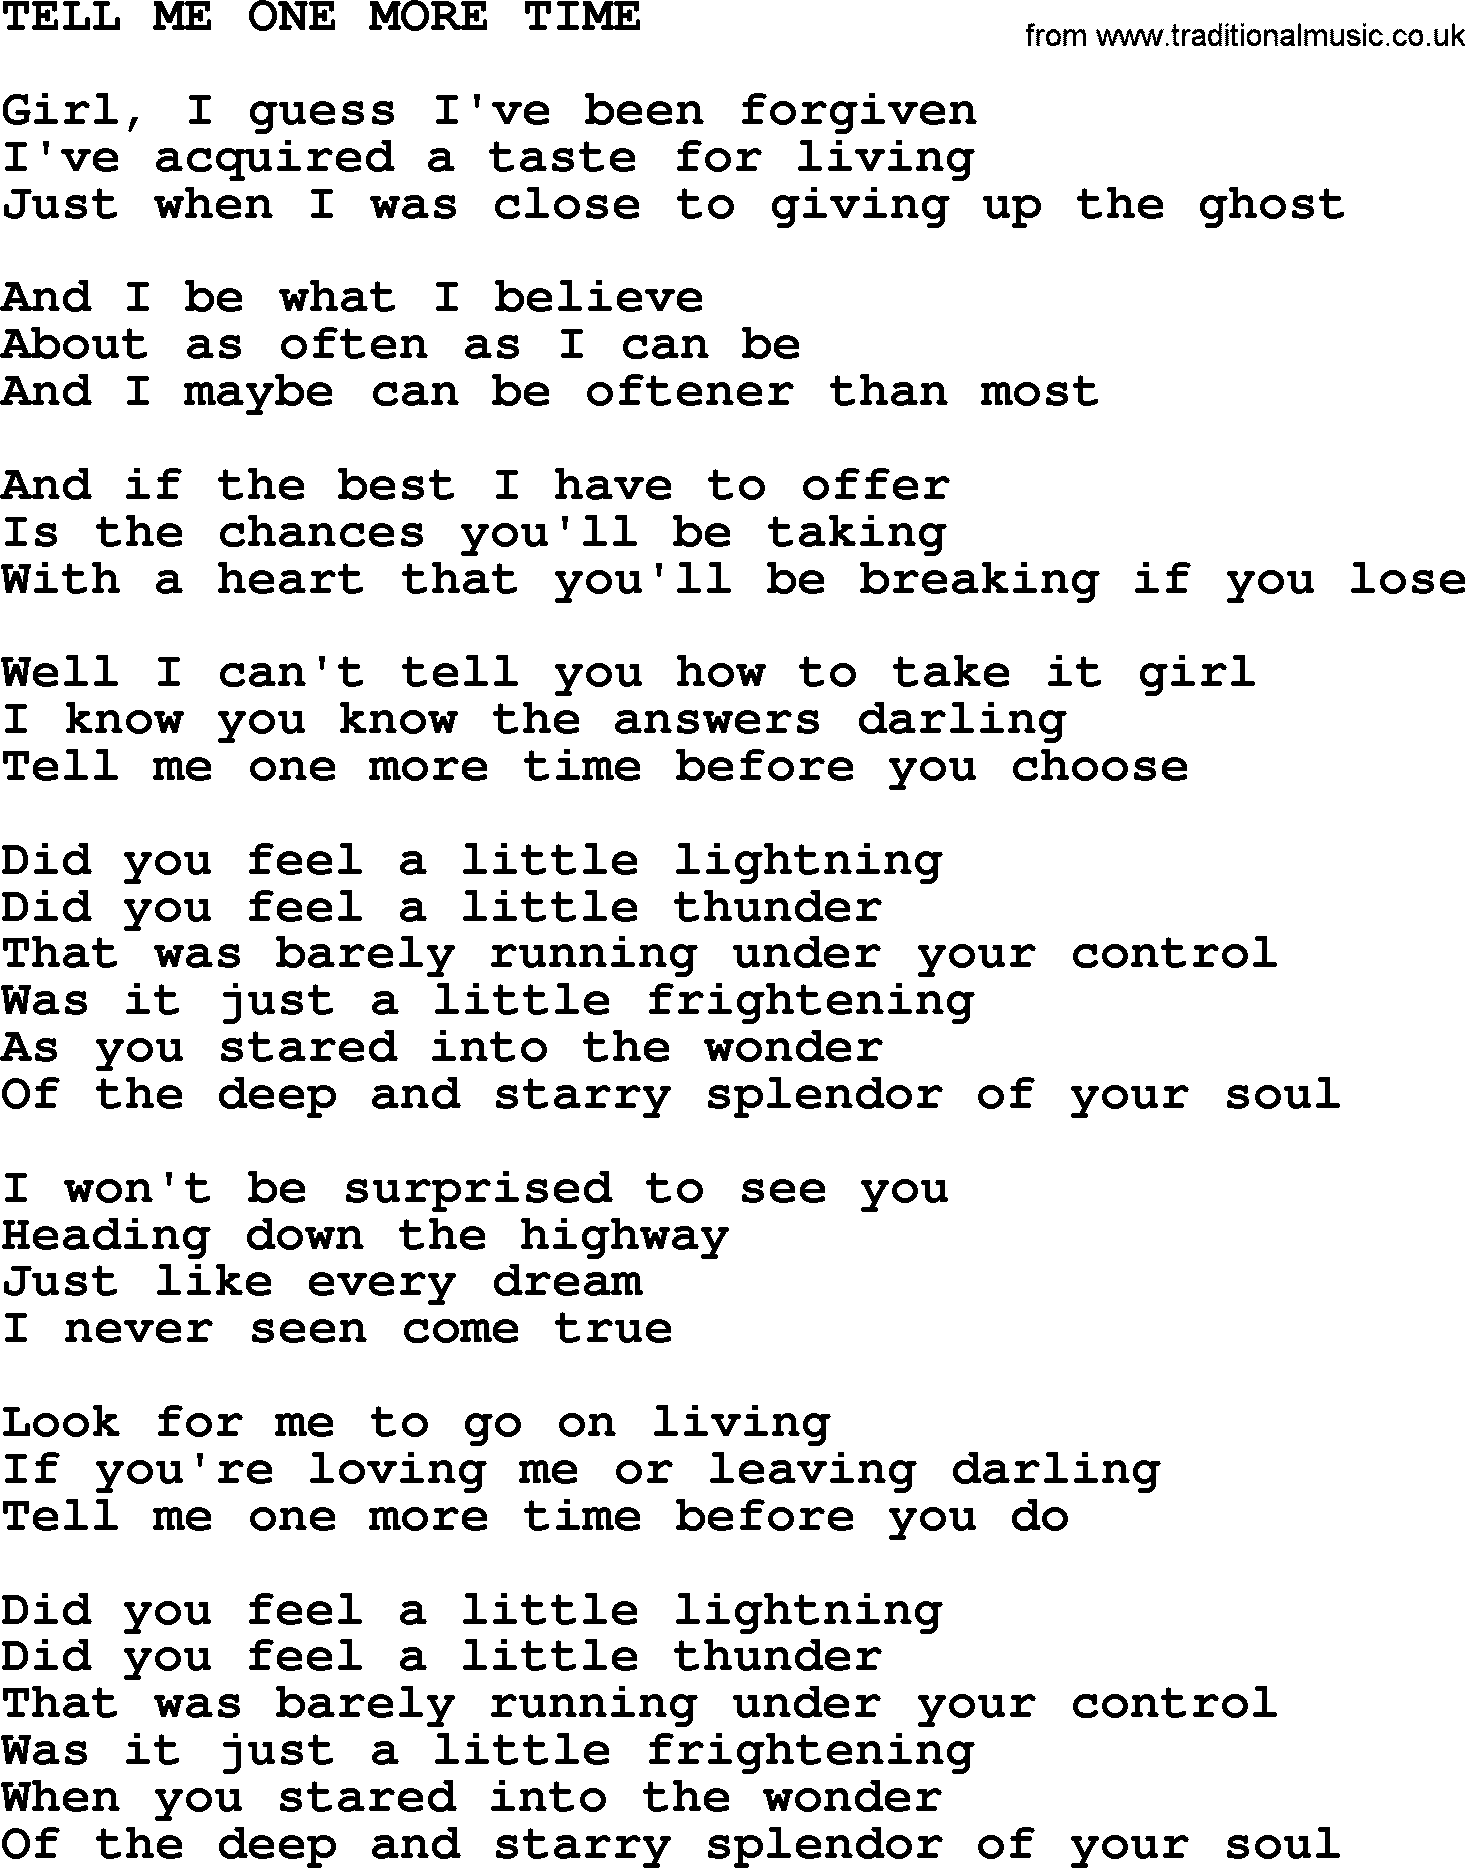 Kris Kristofferson song: Tell Me One More Time lyrics